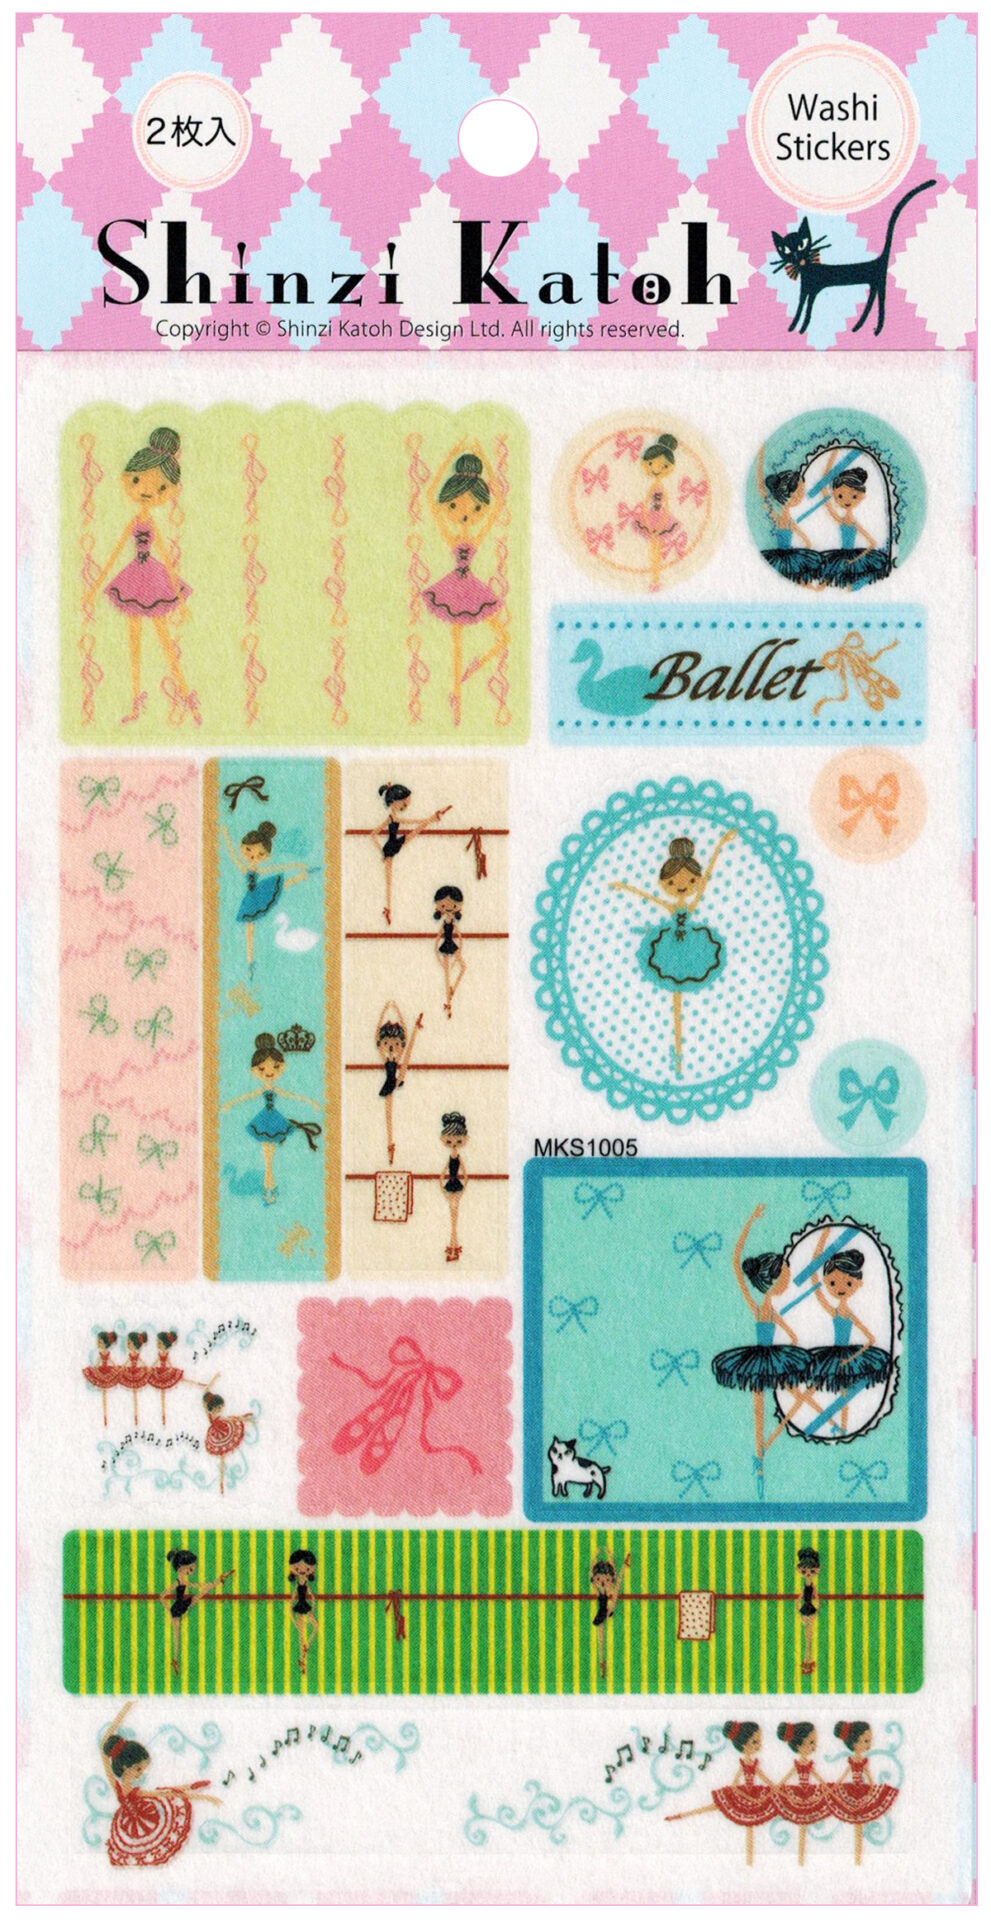 Shinzi Katoh Swan Lake Ballet Washi Sticker Sheets